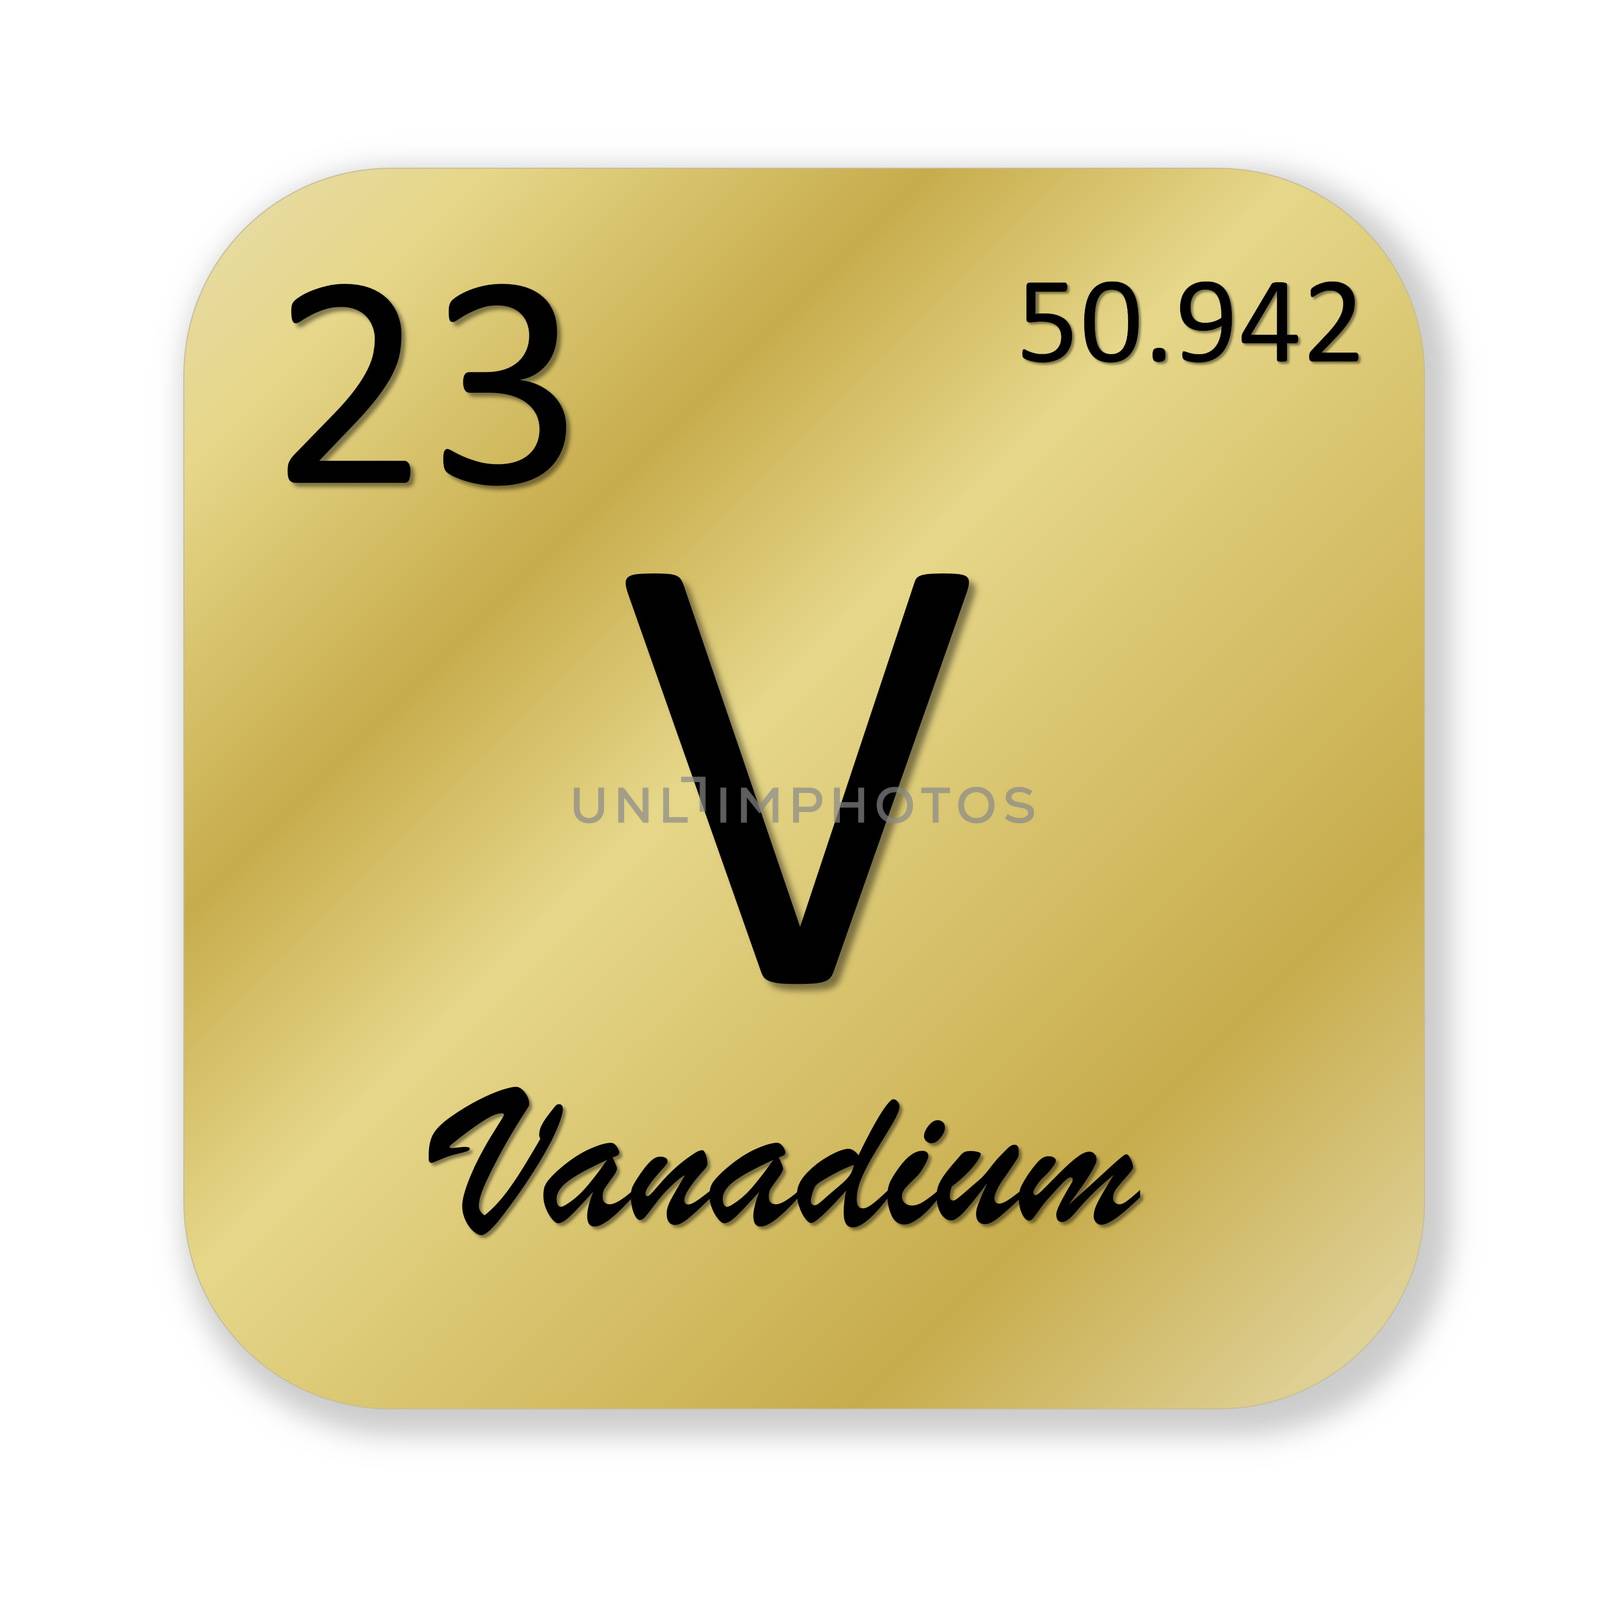 Black vanadium element into golden square shape isolated in white background